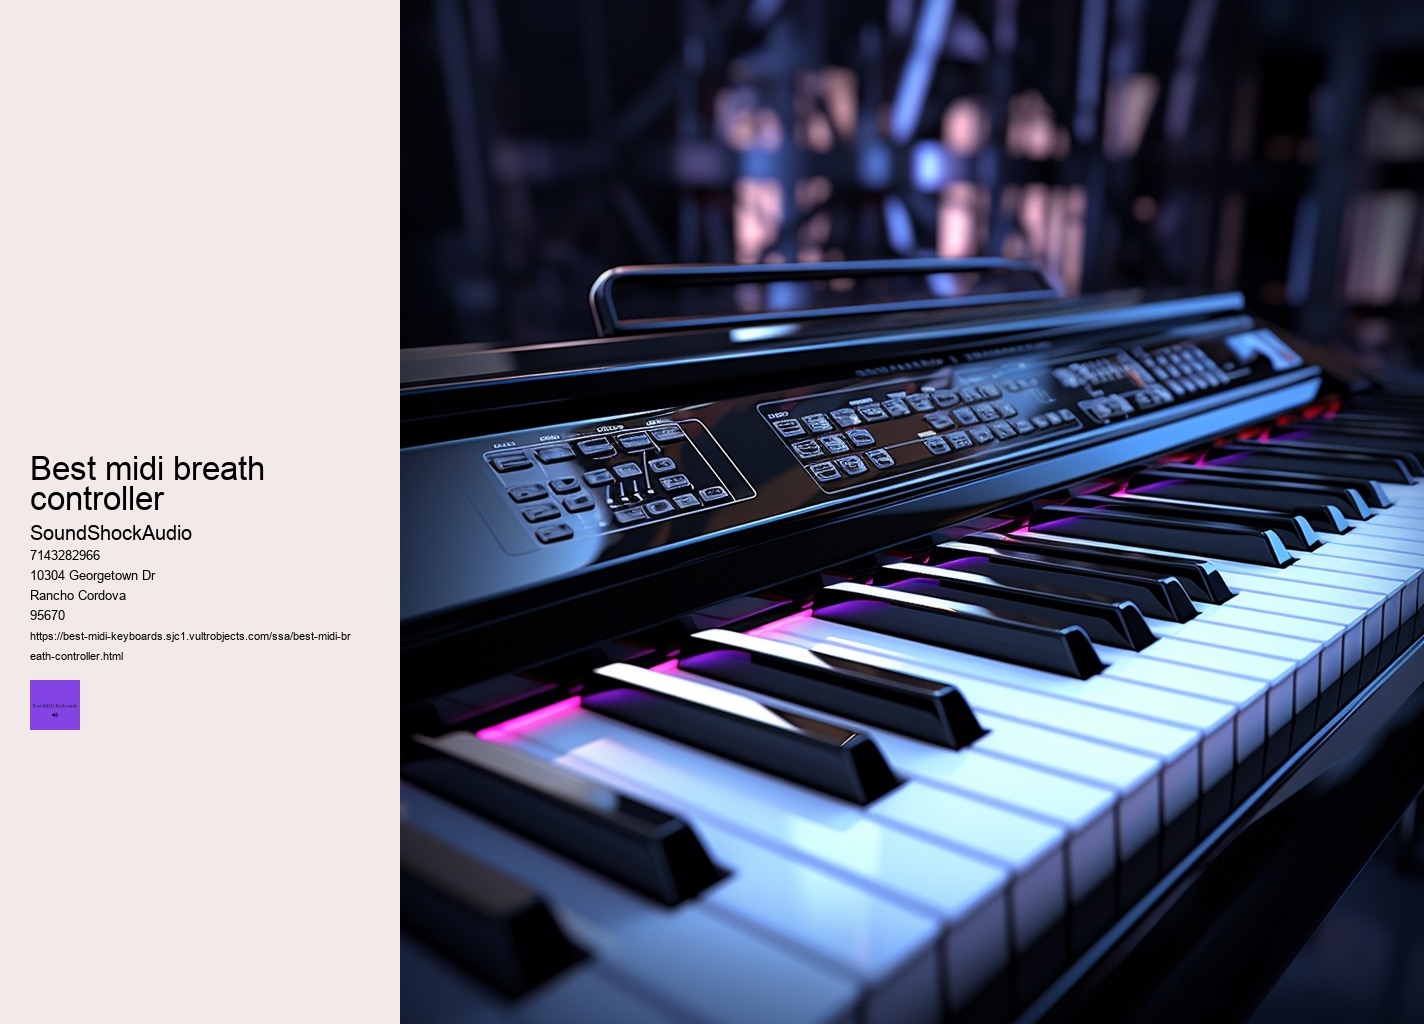 Should I buy MIDI keyboard or digital piano?